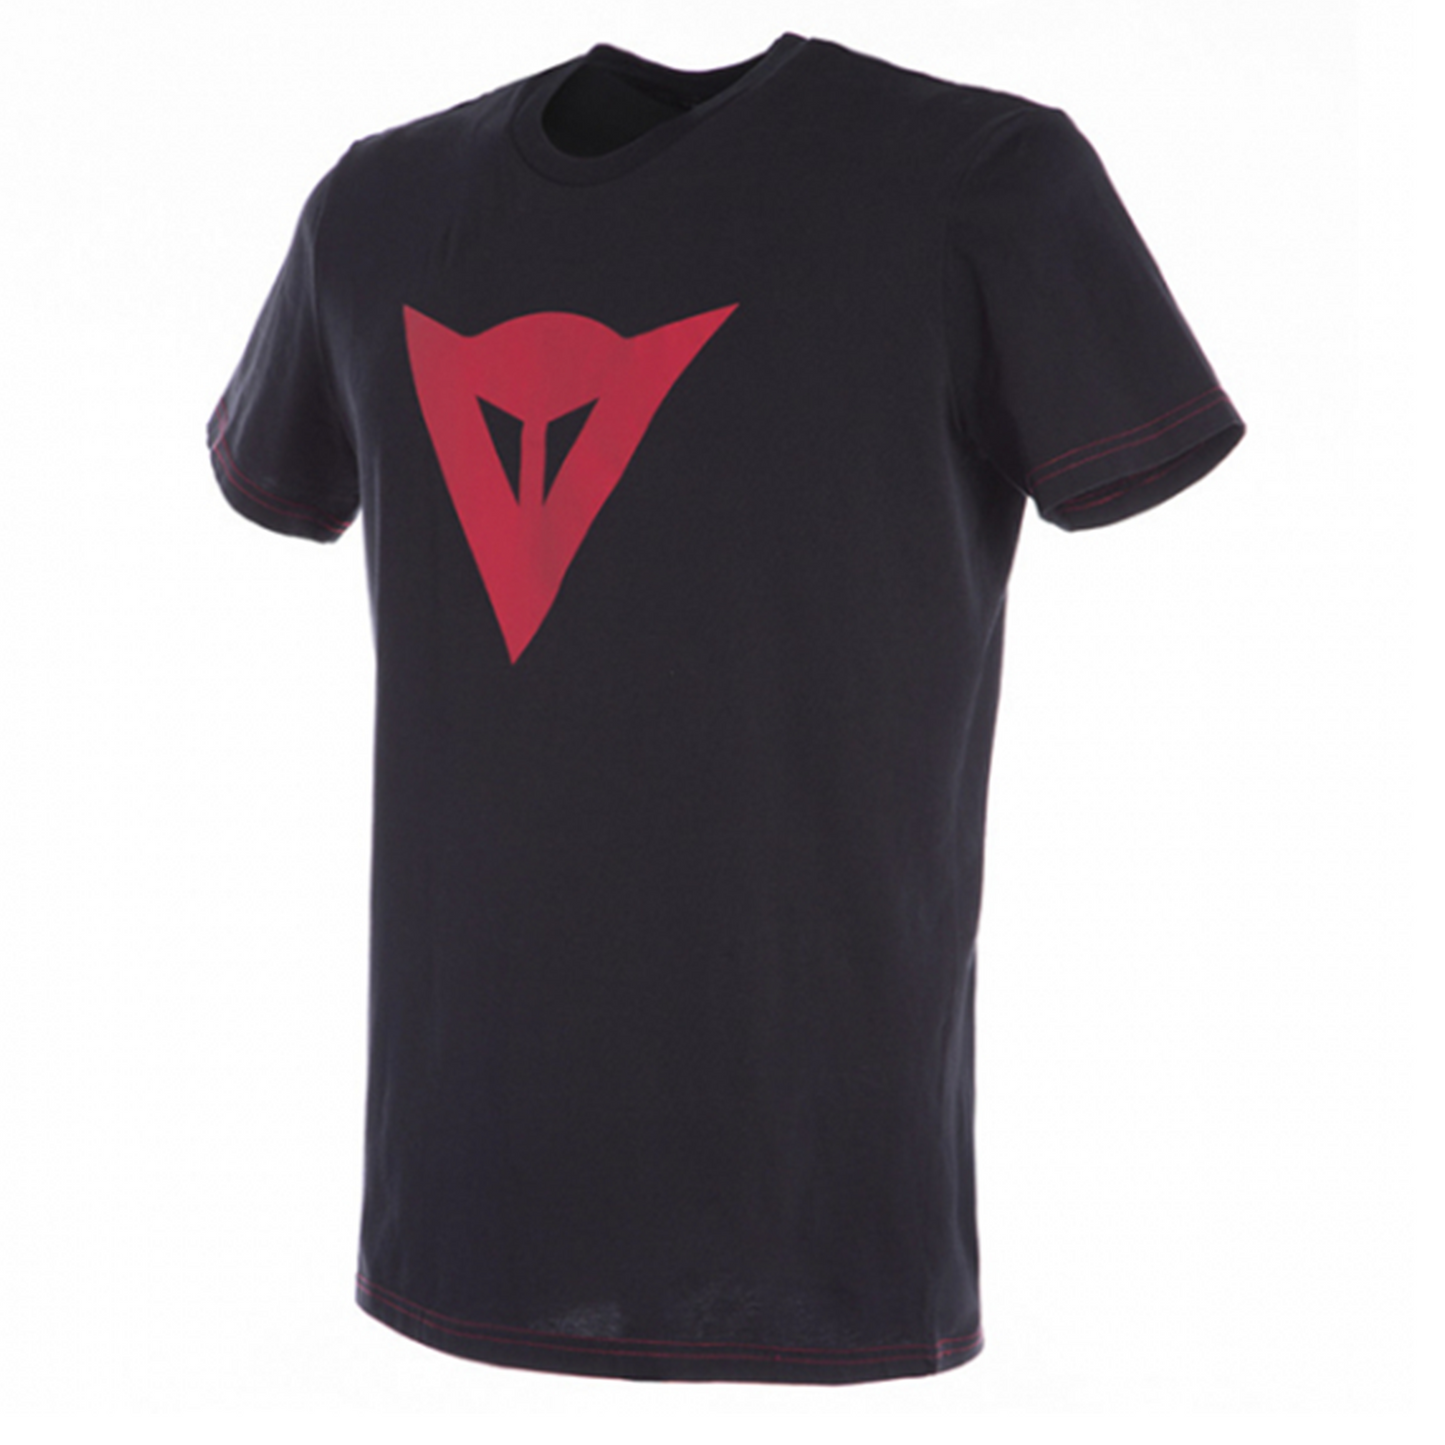 Dainese Speed Demon T-Shirt (606) - Black/Red